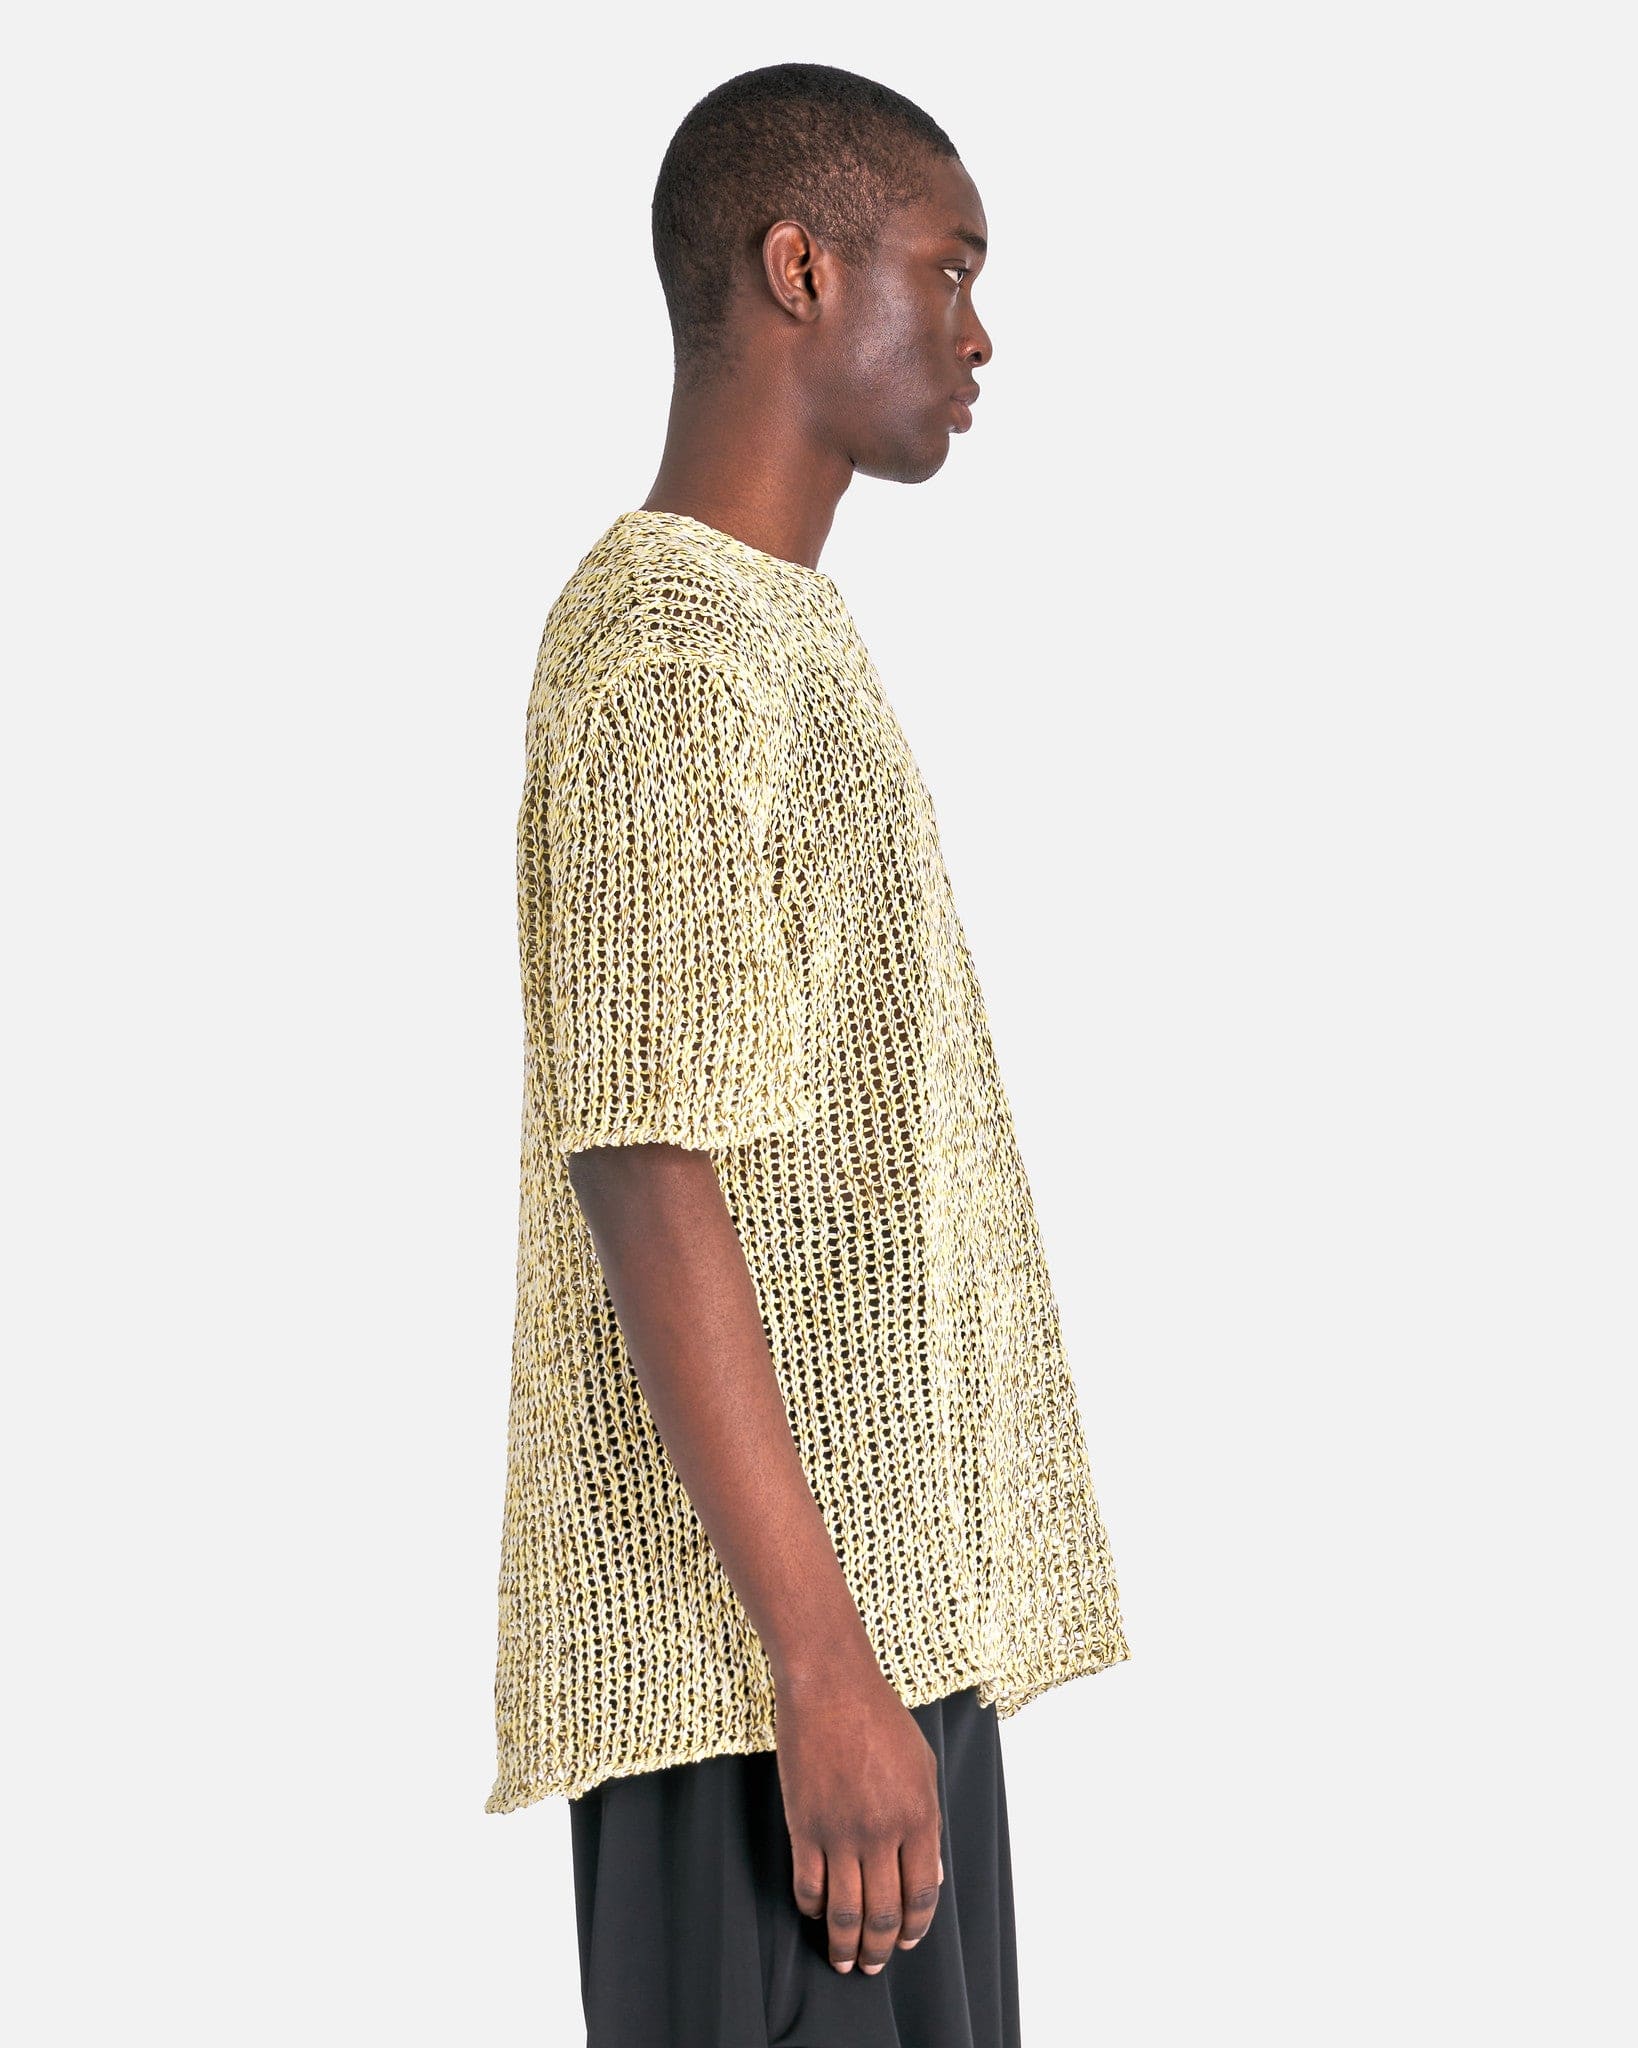 Jil Sander Men's T-Shirts Mouline Open Cotton Knit T-Shirt in Yellow/Brown